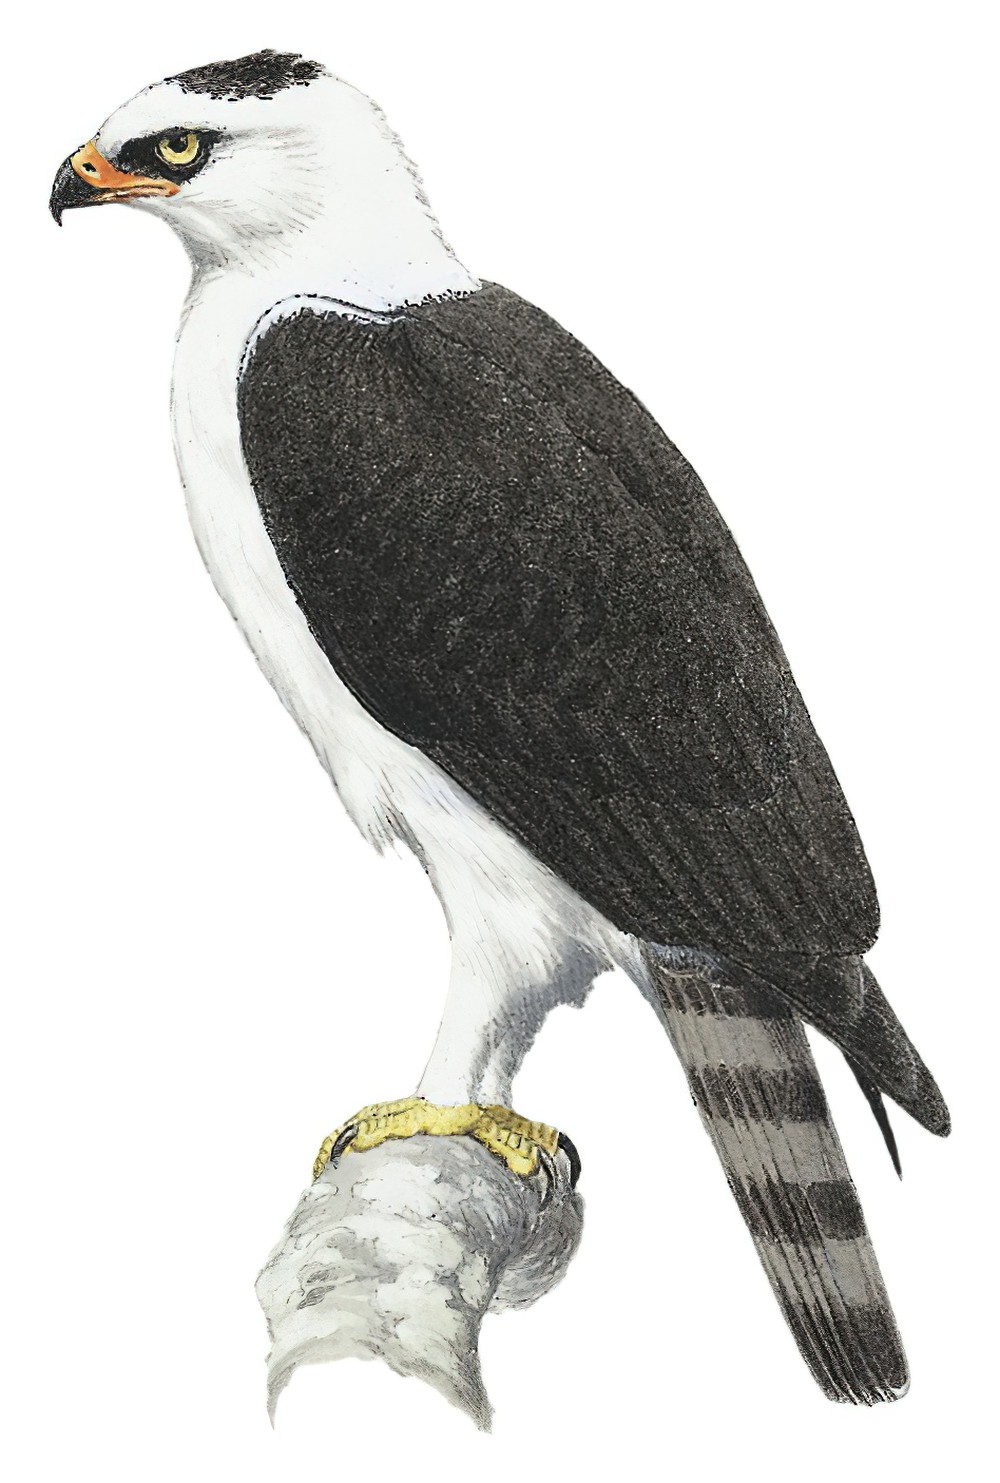 Black-and-white Hawk-Eagle / Spizaetus melanoleucus